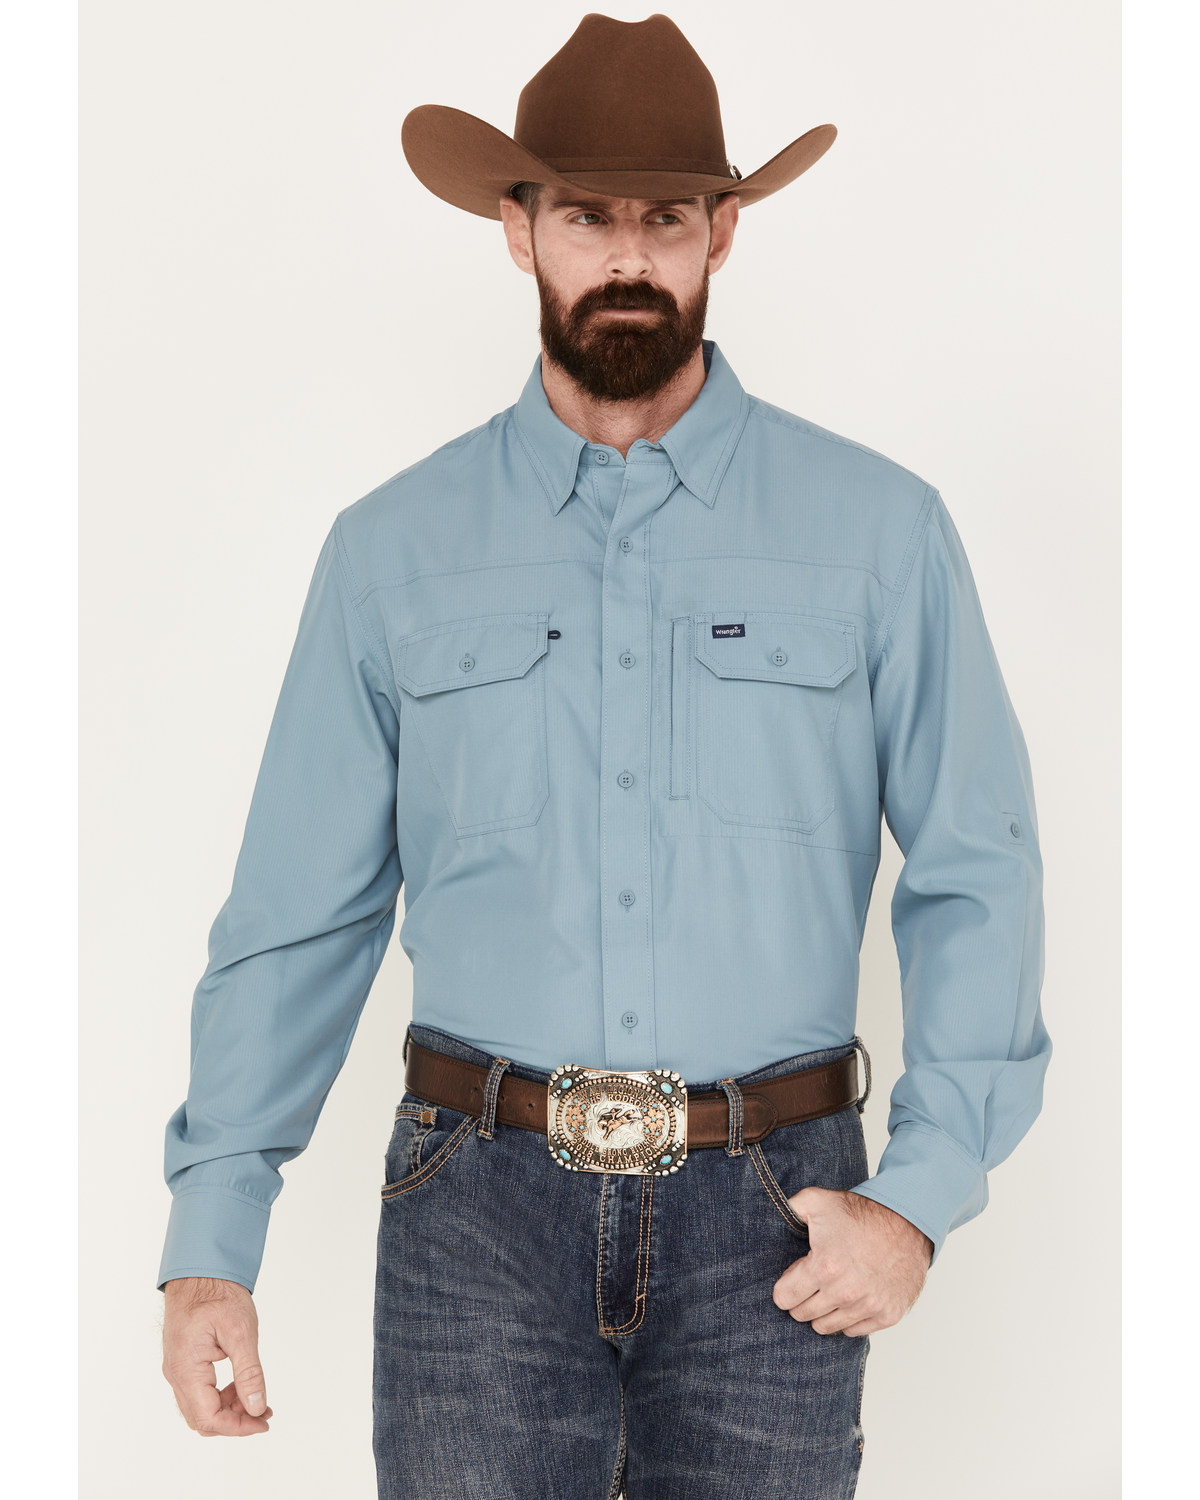 Wrangler Men's Solid Performance Long Sleeve Button-Down Shirt